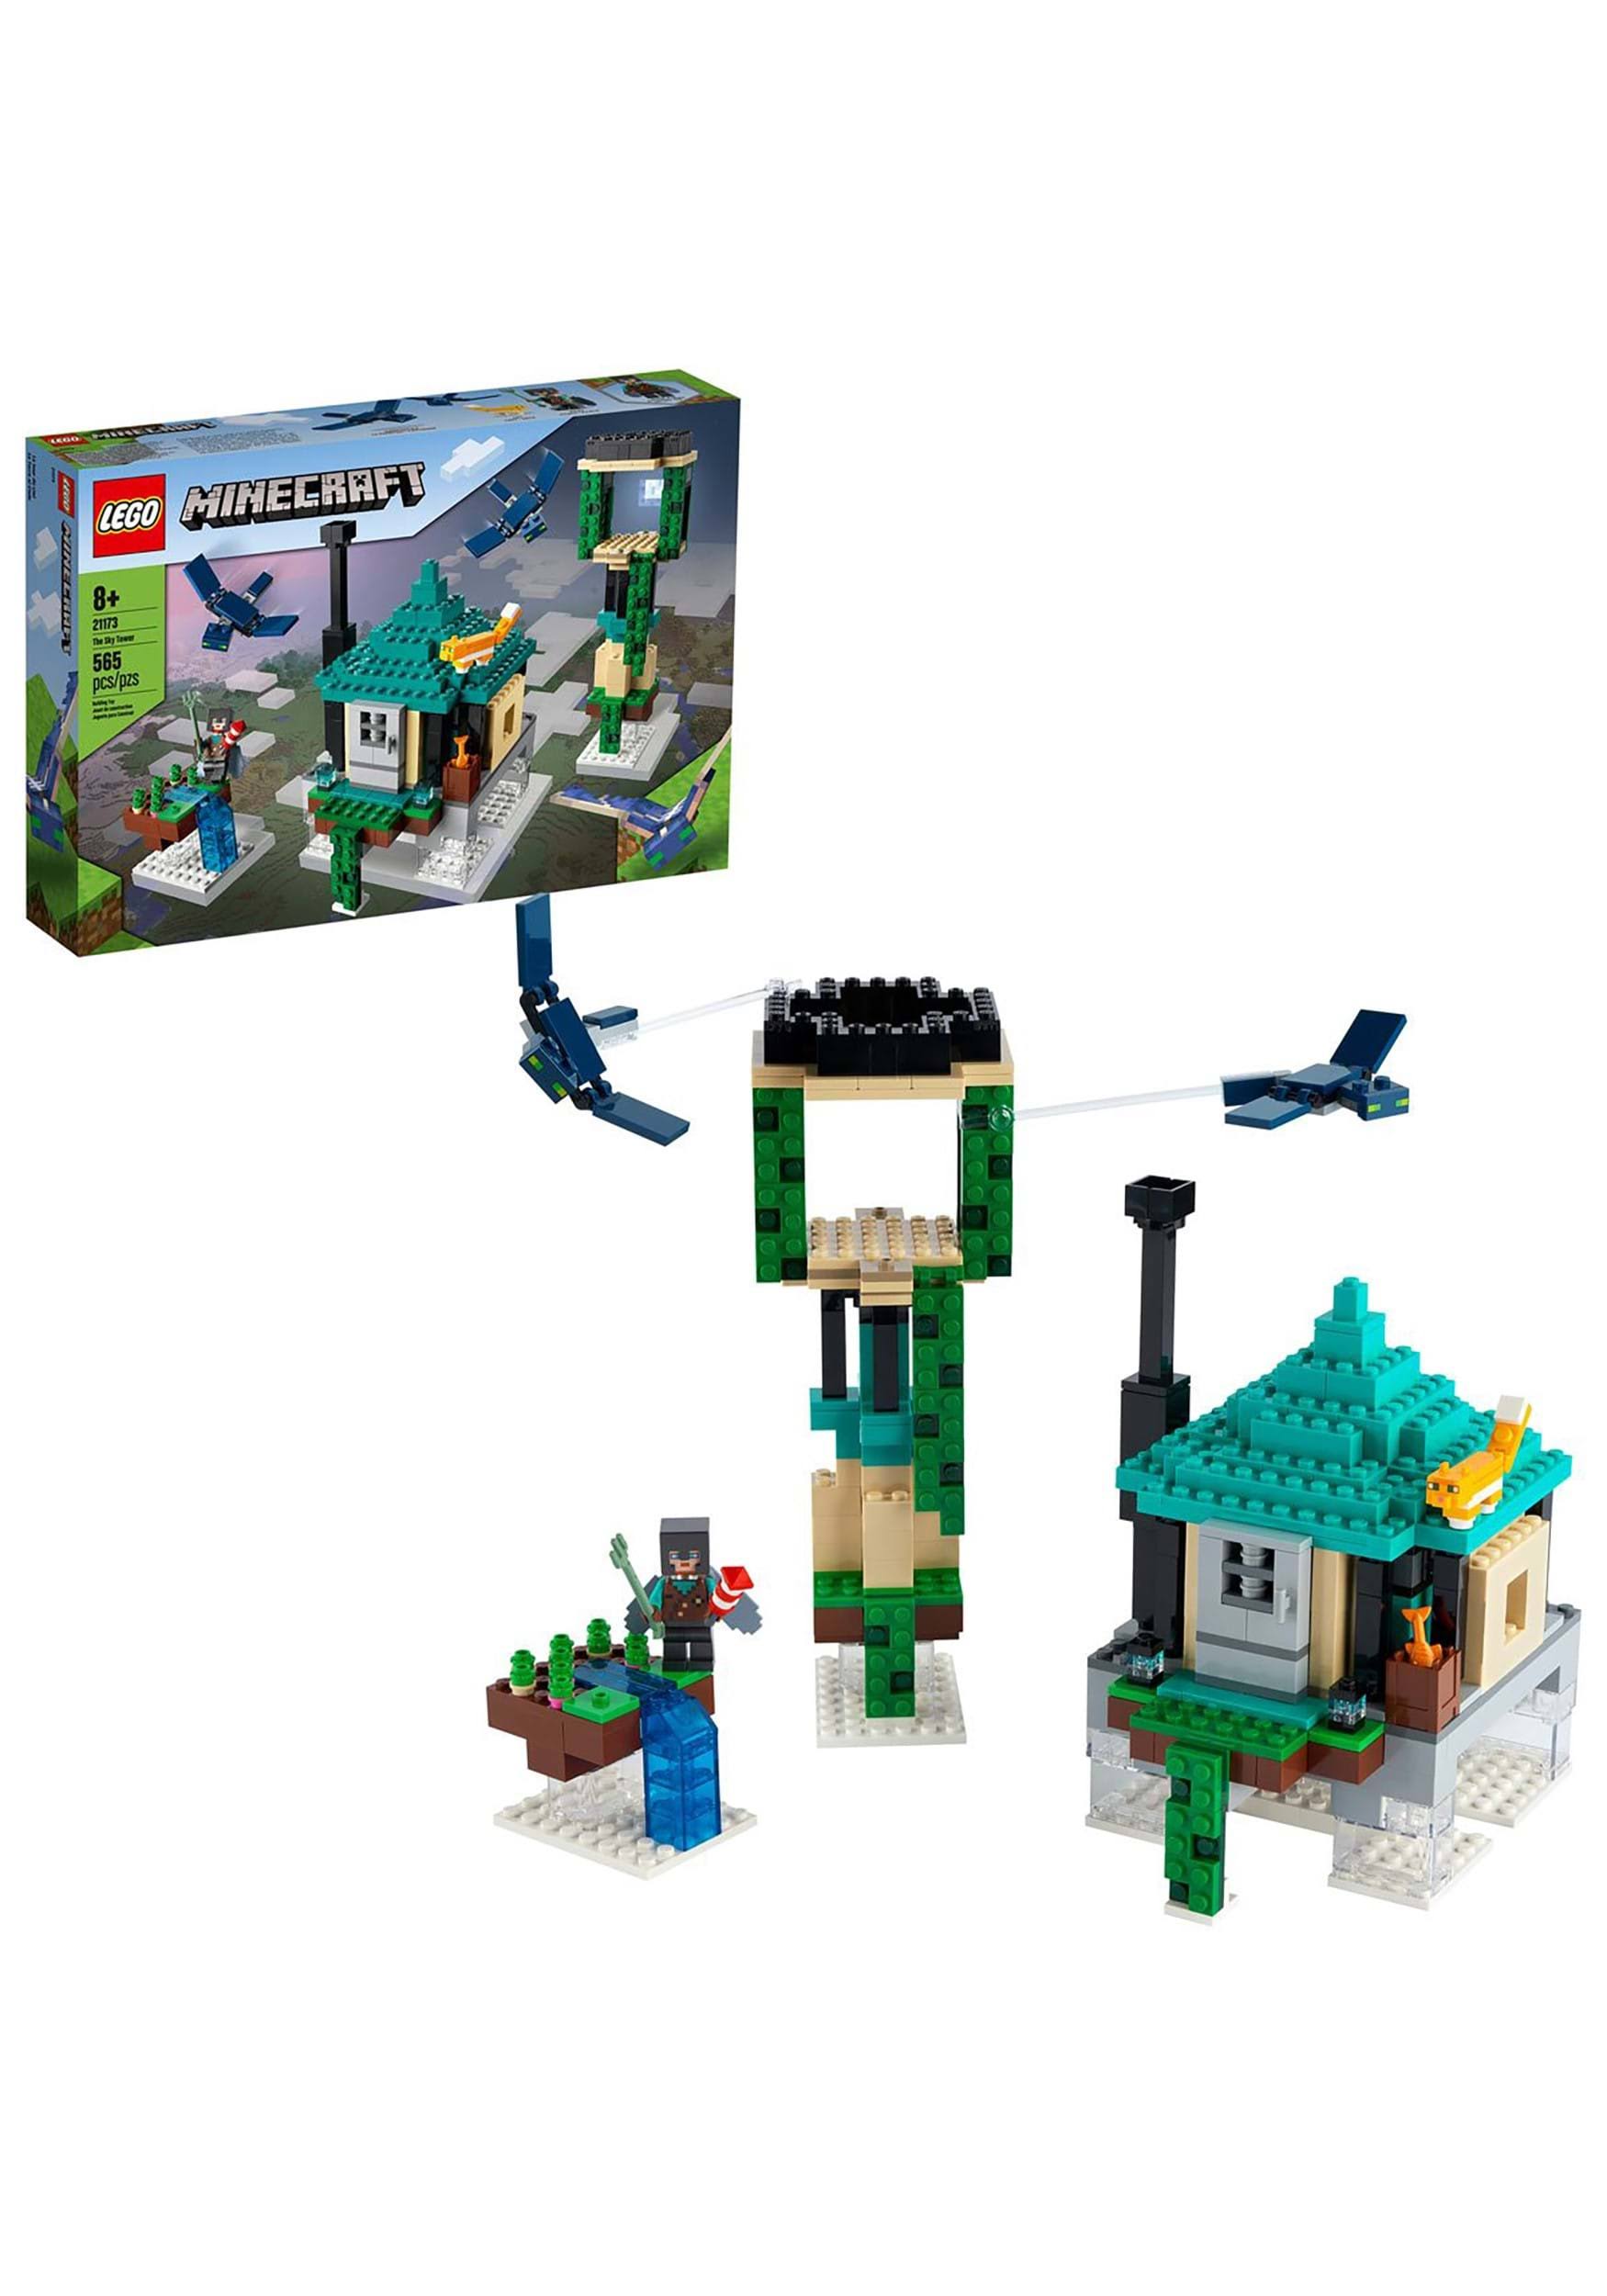 Lego minecraft 21173 the sky tower 565 piece building kit